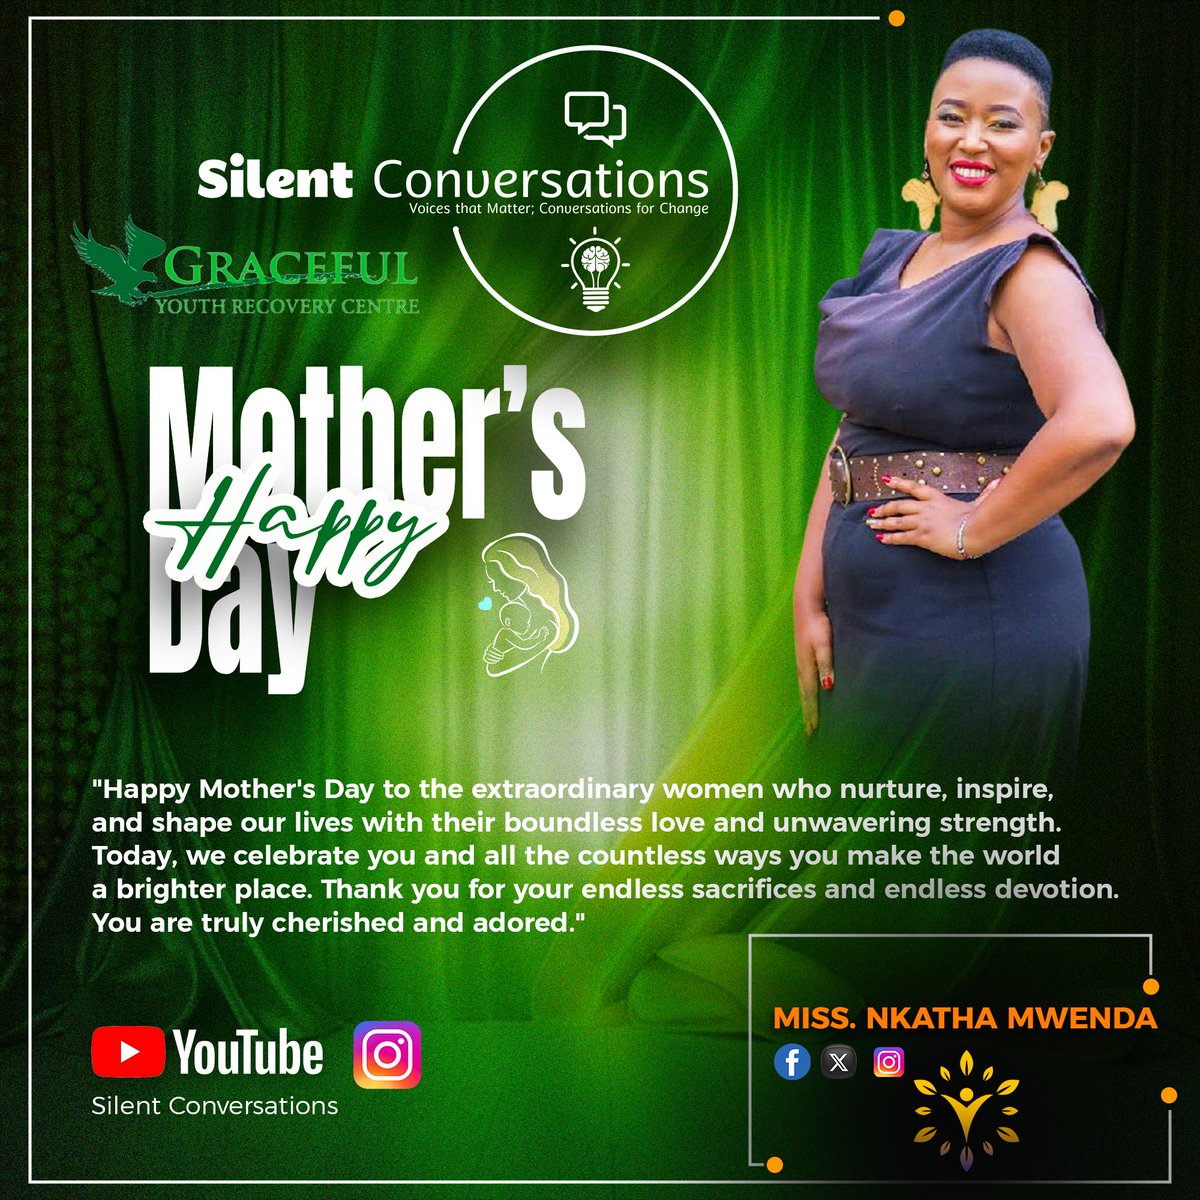 Happy Blessed Day #MothersDay #AllGlorytoGod #addictionrecovery #thereishelp #youarenotalone 
youtu.be/-7DCf519w6g
@gracefulyouth #stopstigma #strengthenprevention @UNODC